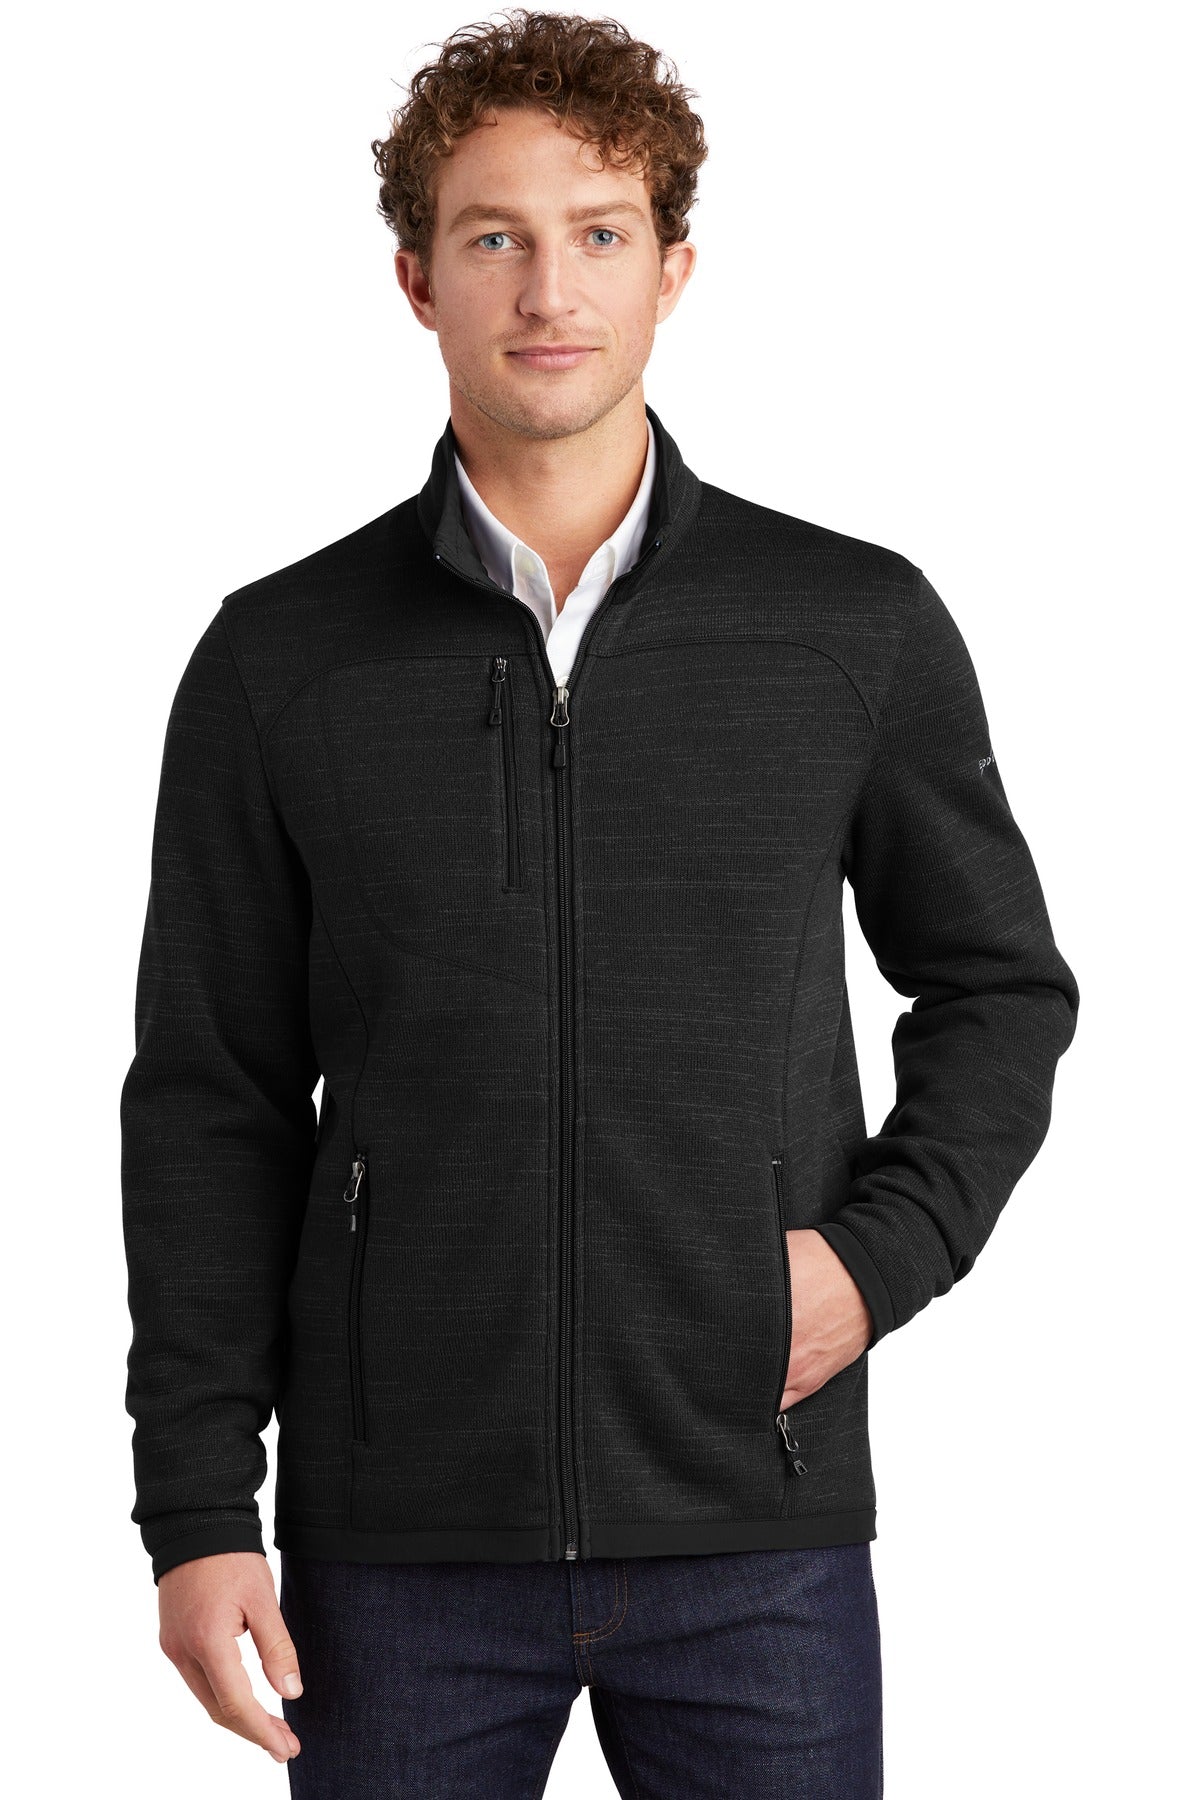 Eddie Bauer ® Sweater Fleece Full-Zip. EB250